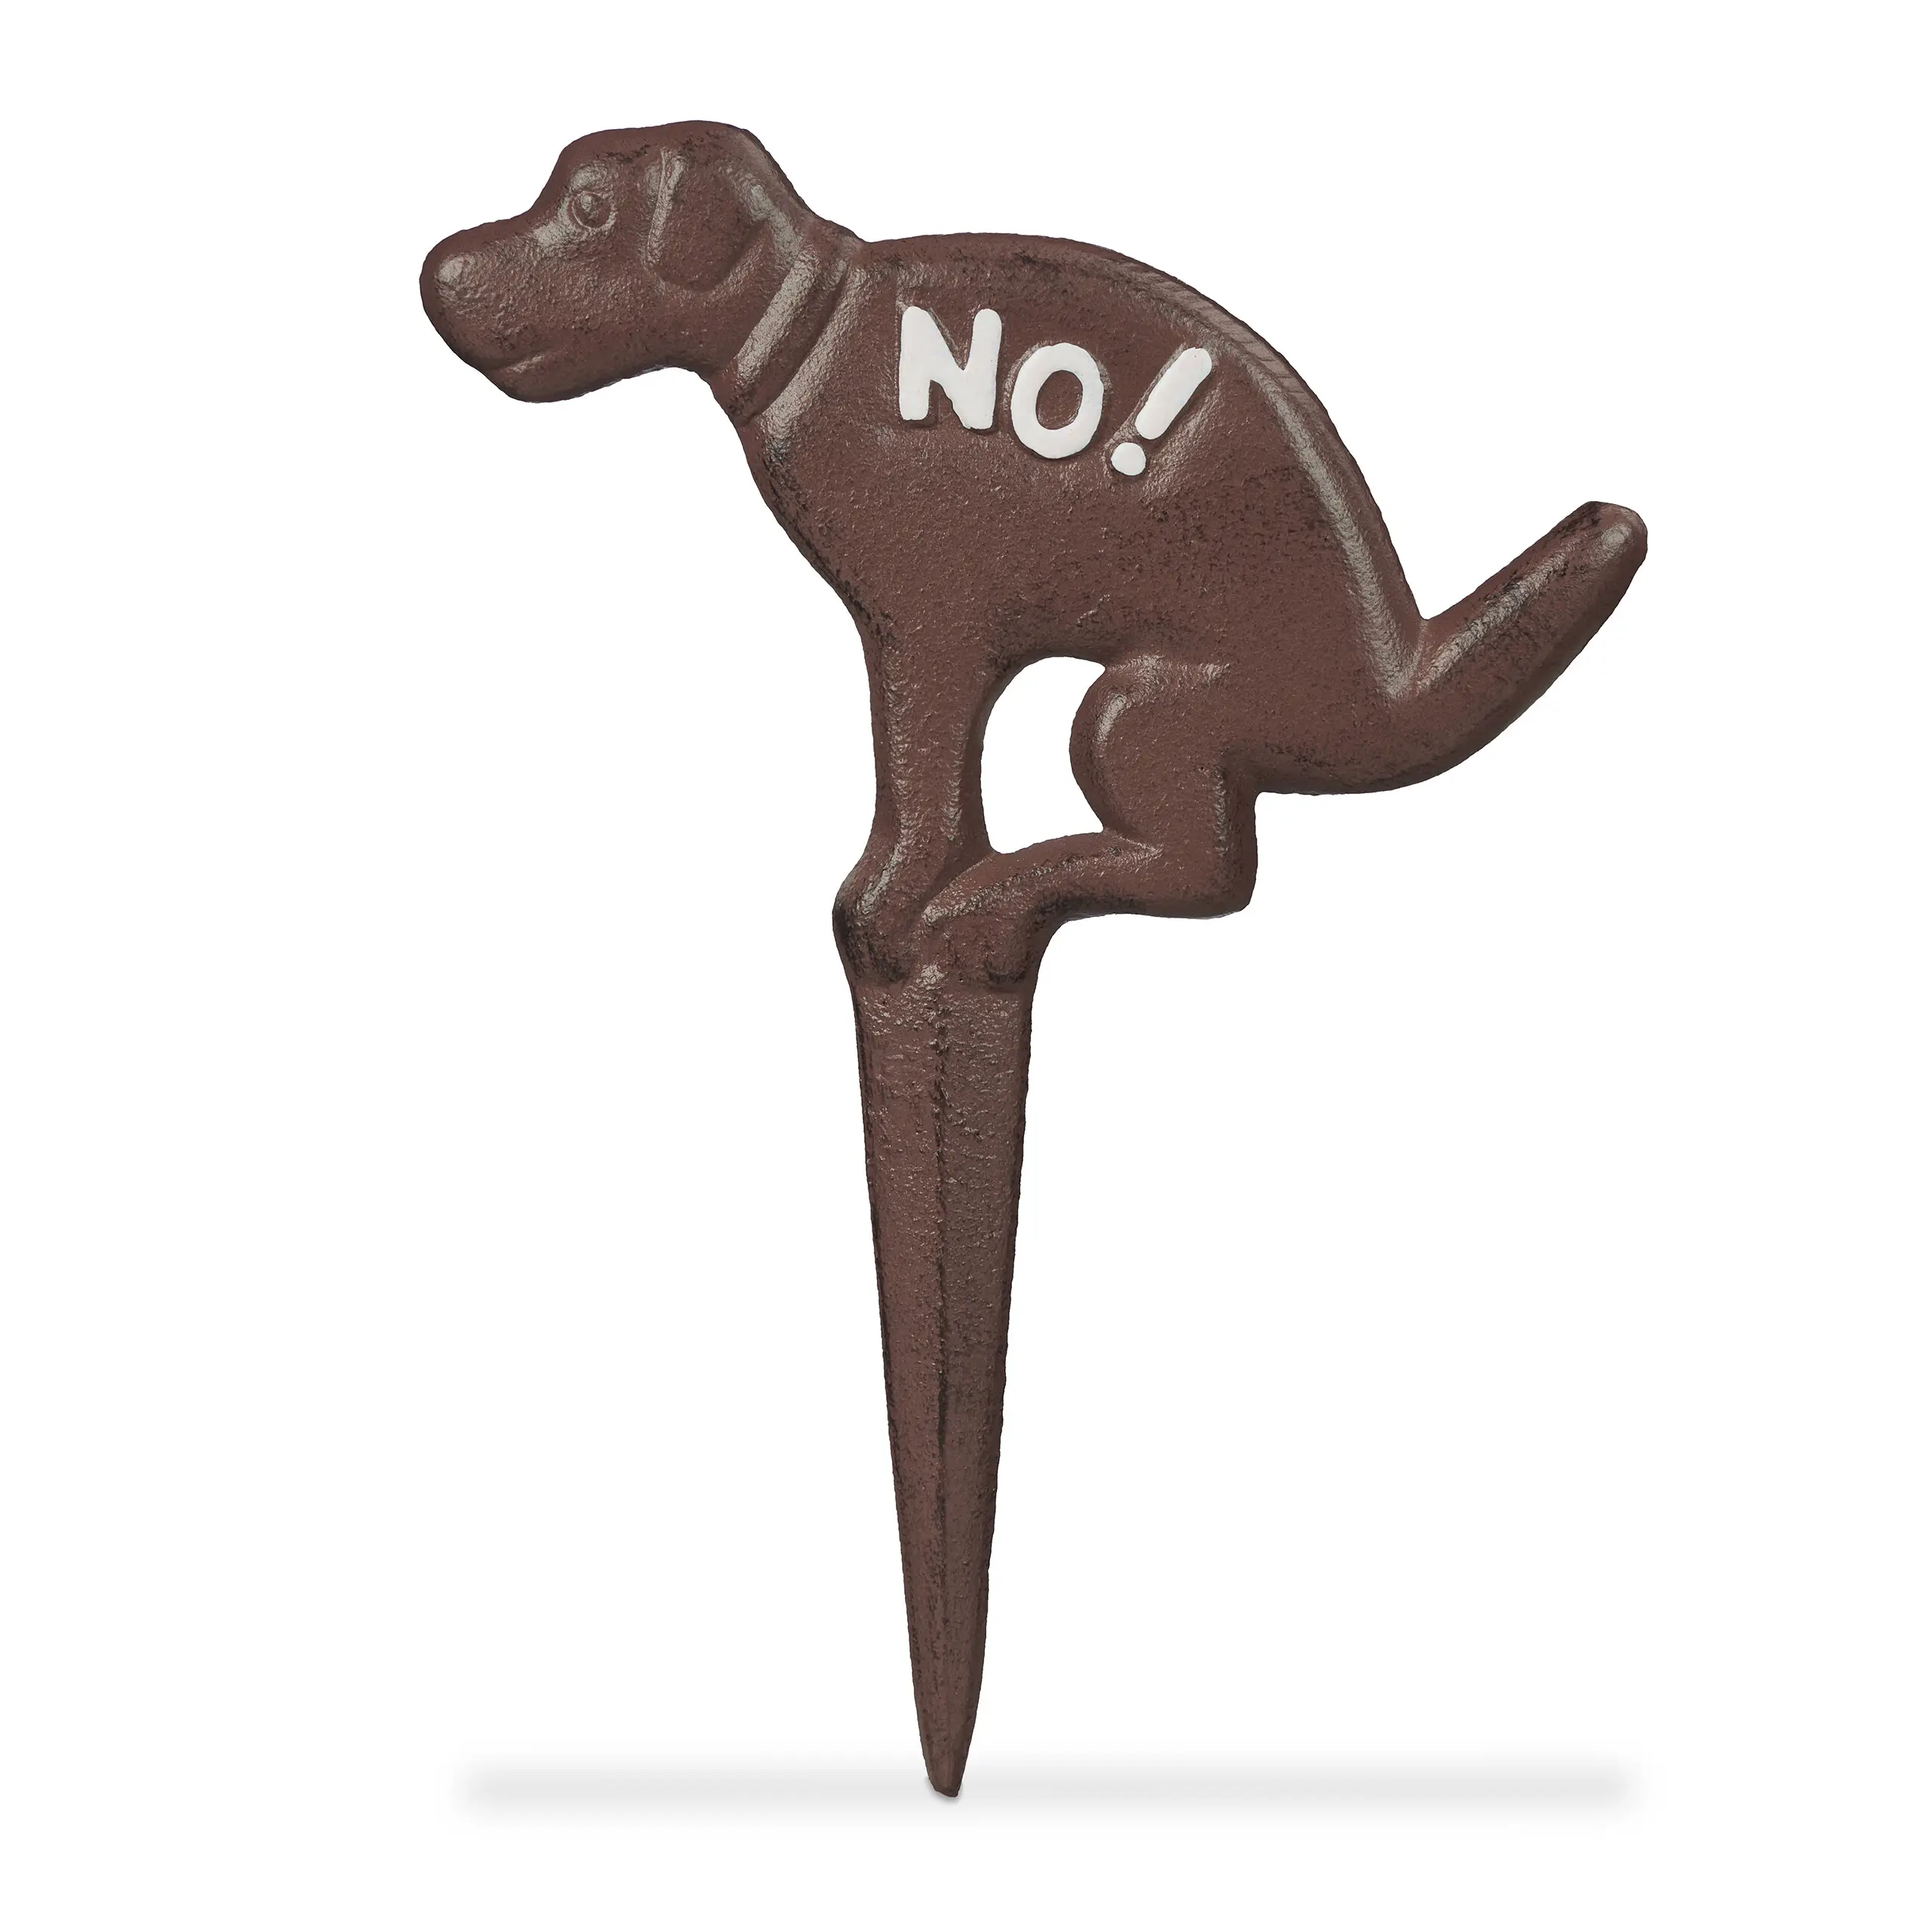 Schild verboten kacken Hunde